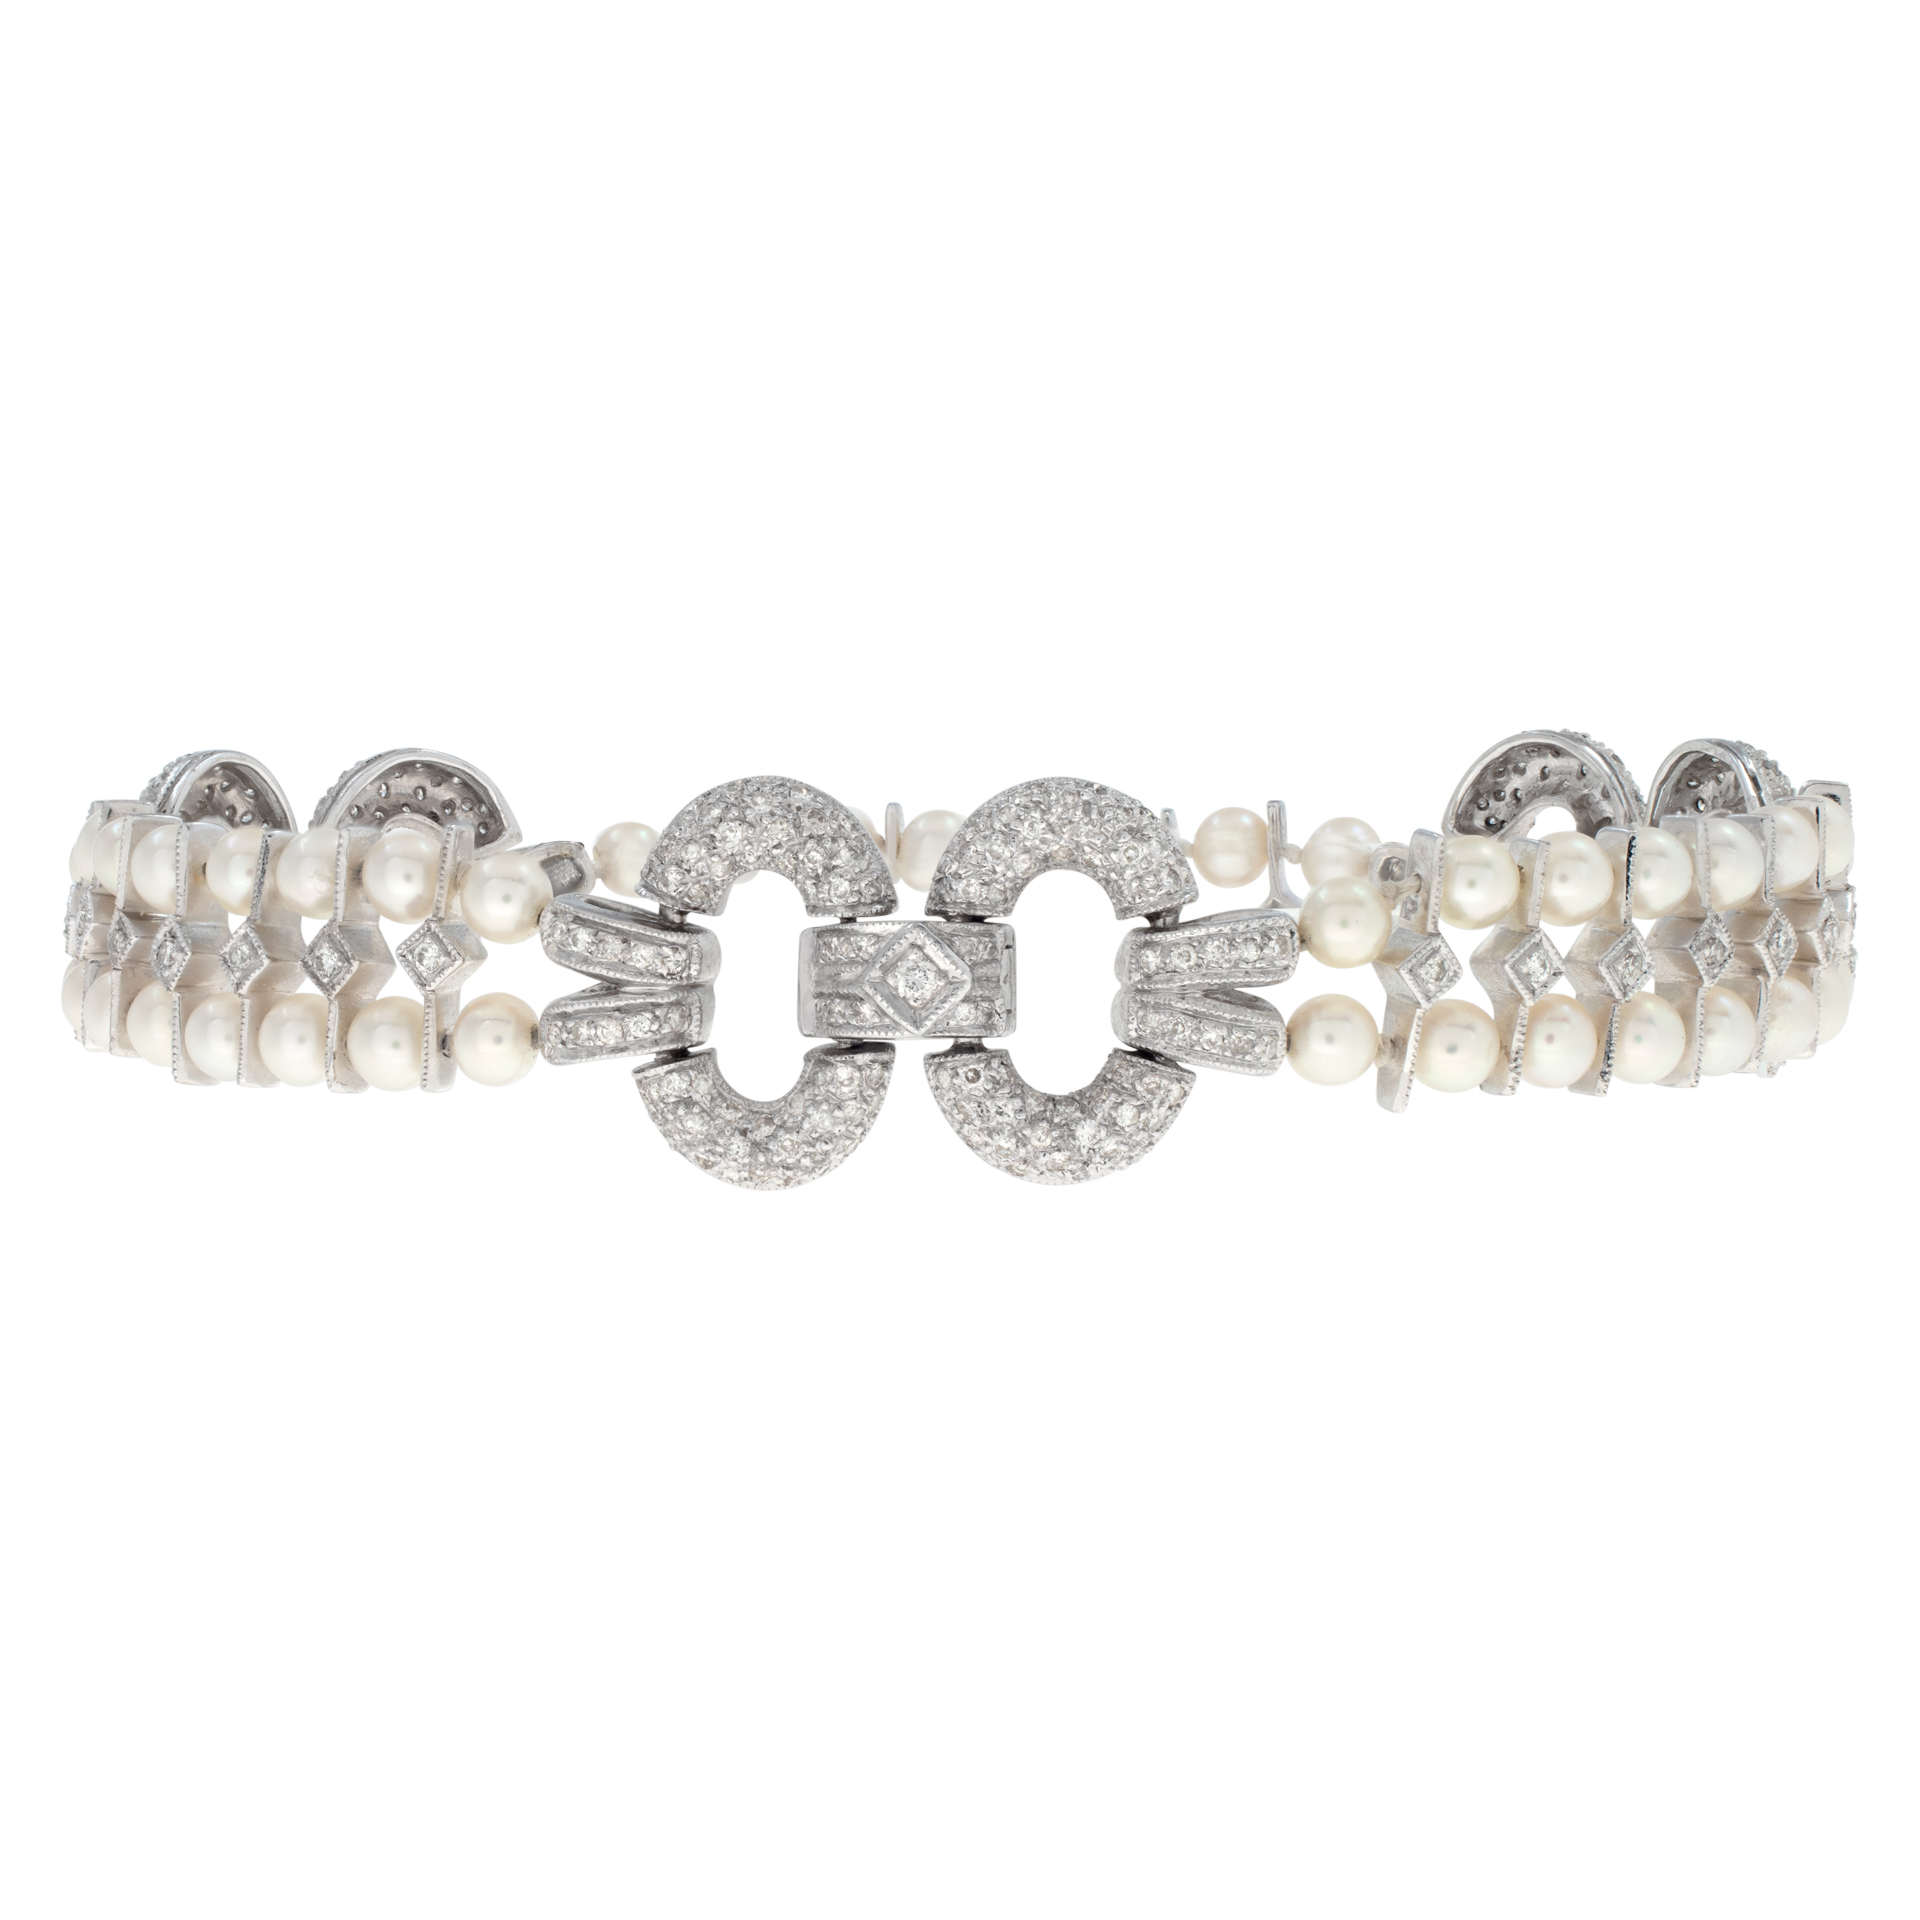 18k white gold diamond and pearls bracelet image 1